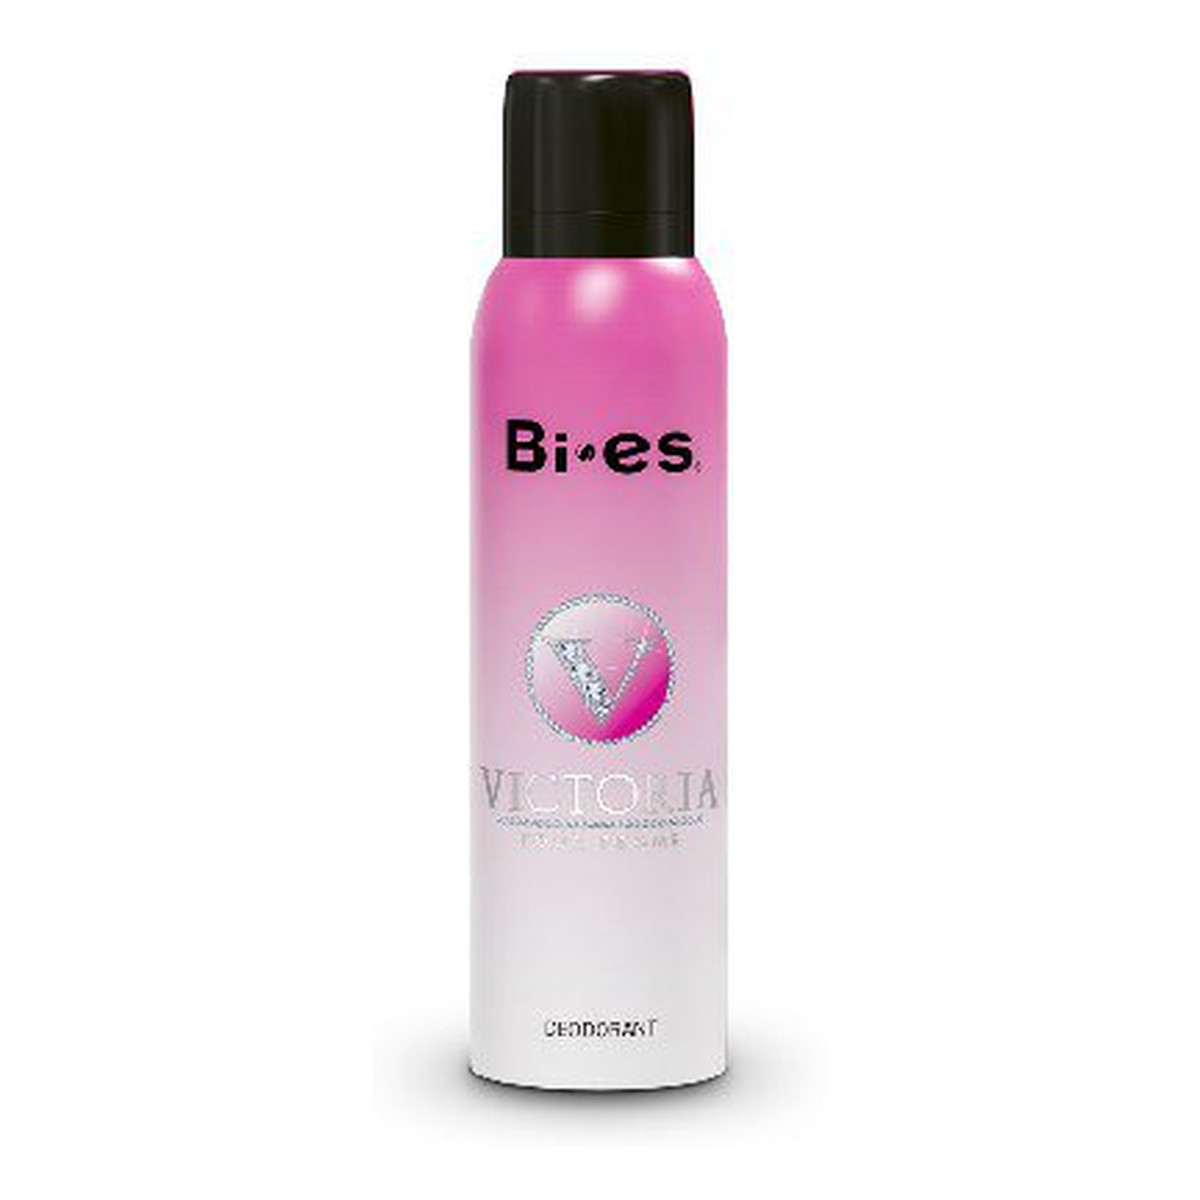 Bi-es Victoria Dezodorant Spray 150ml